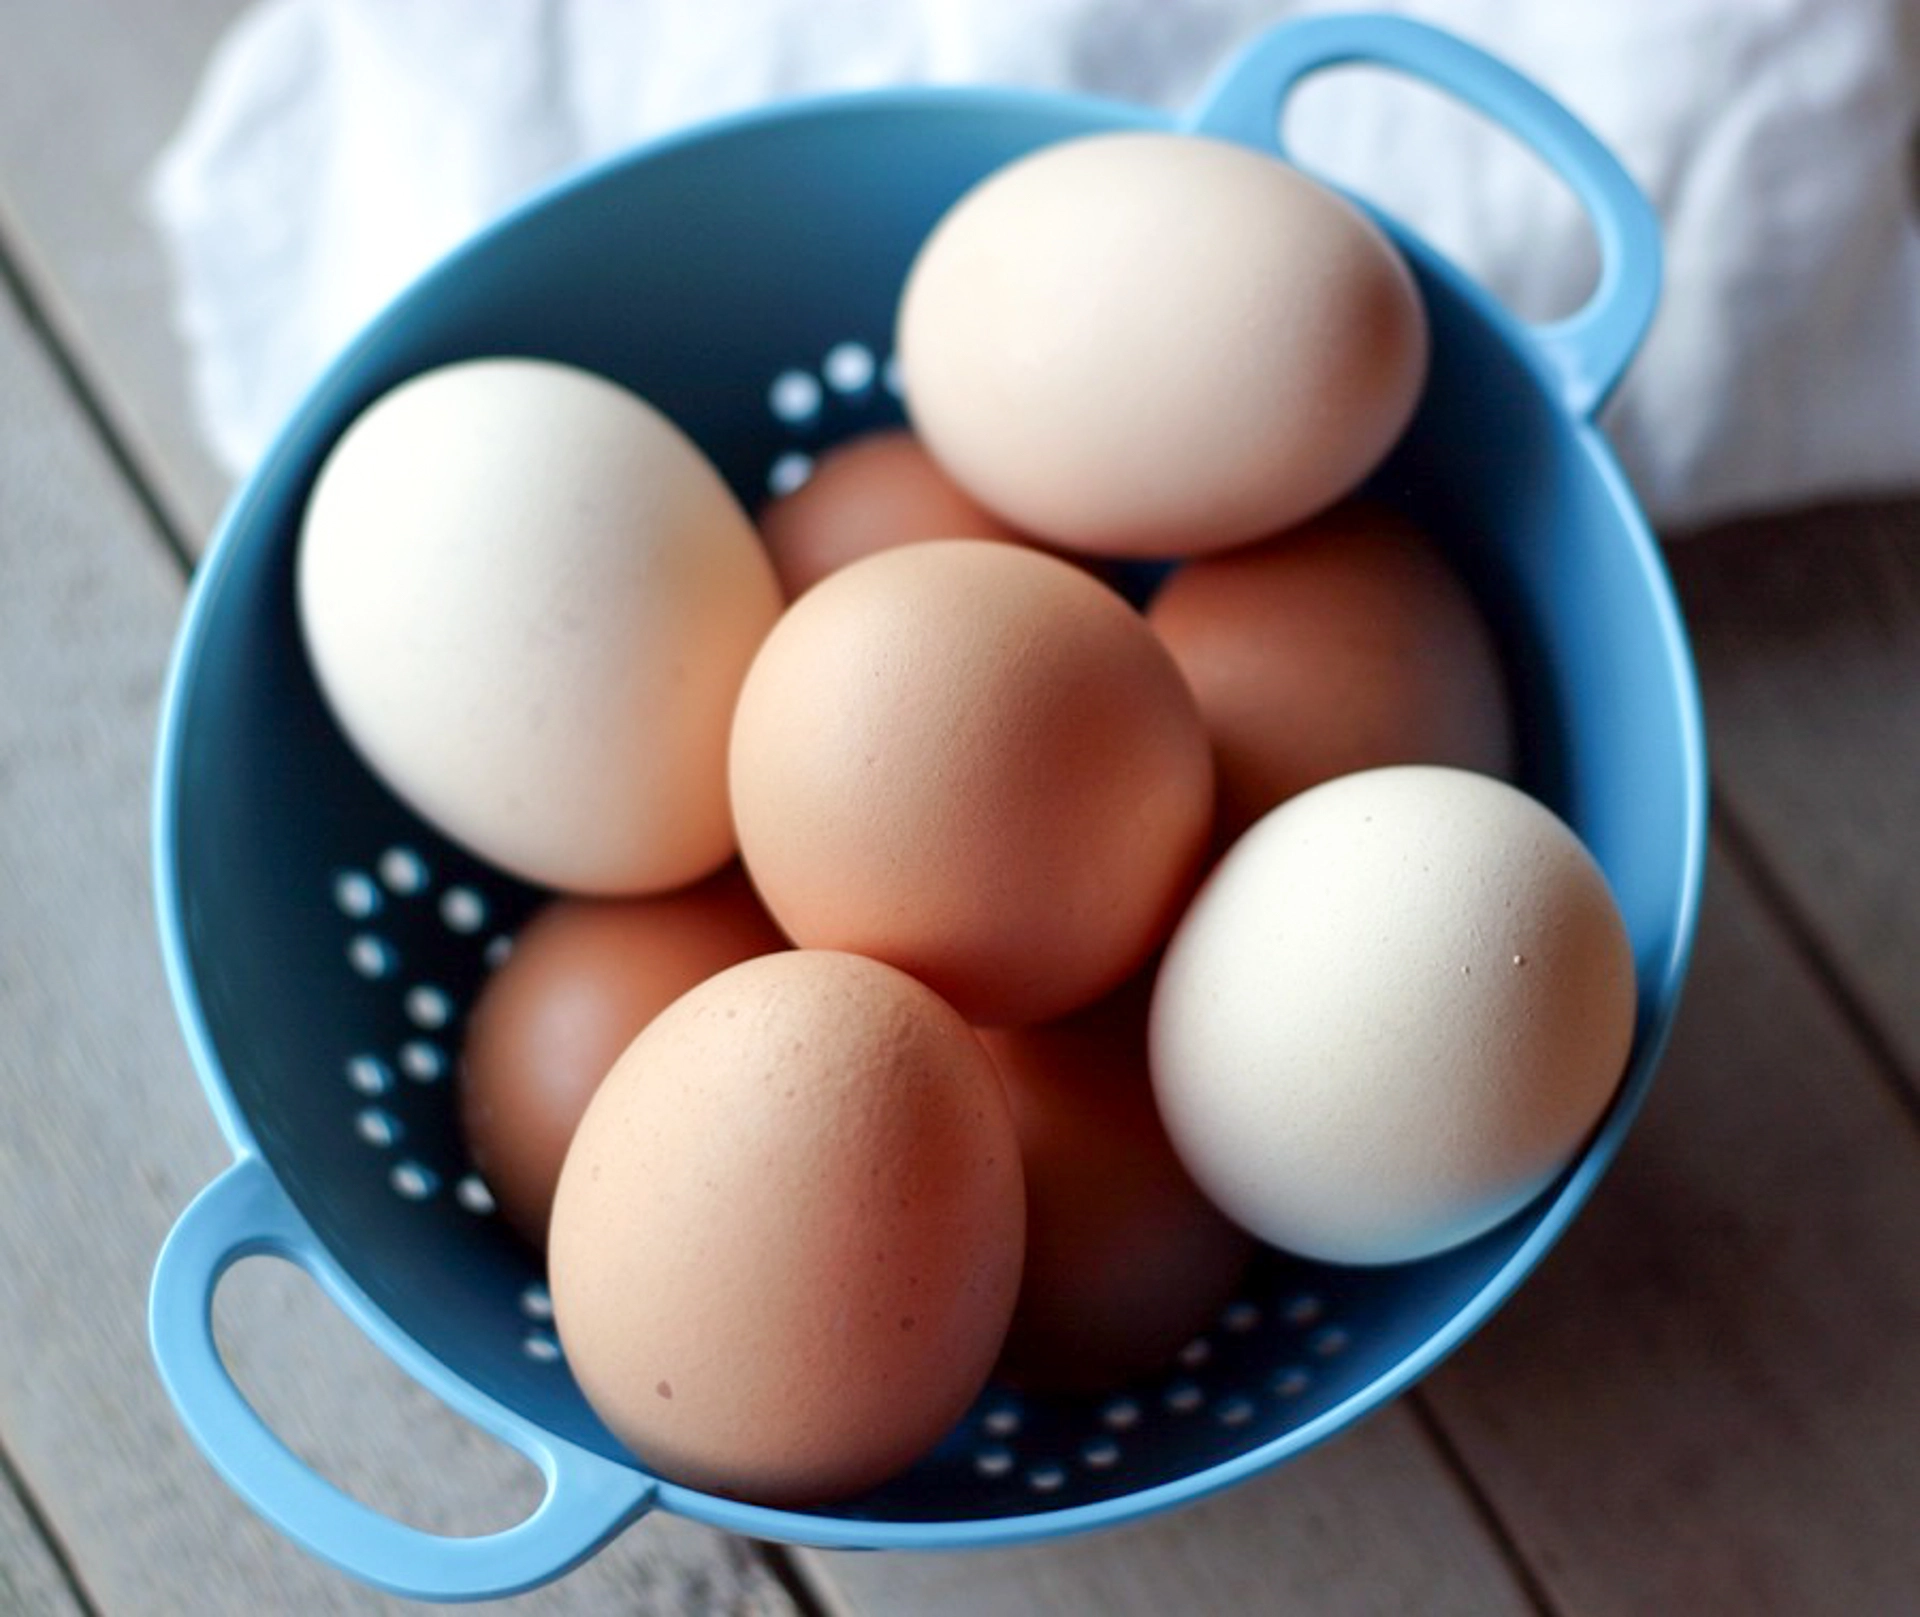 Eggs in basket image